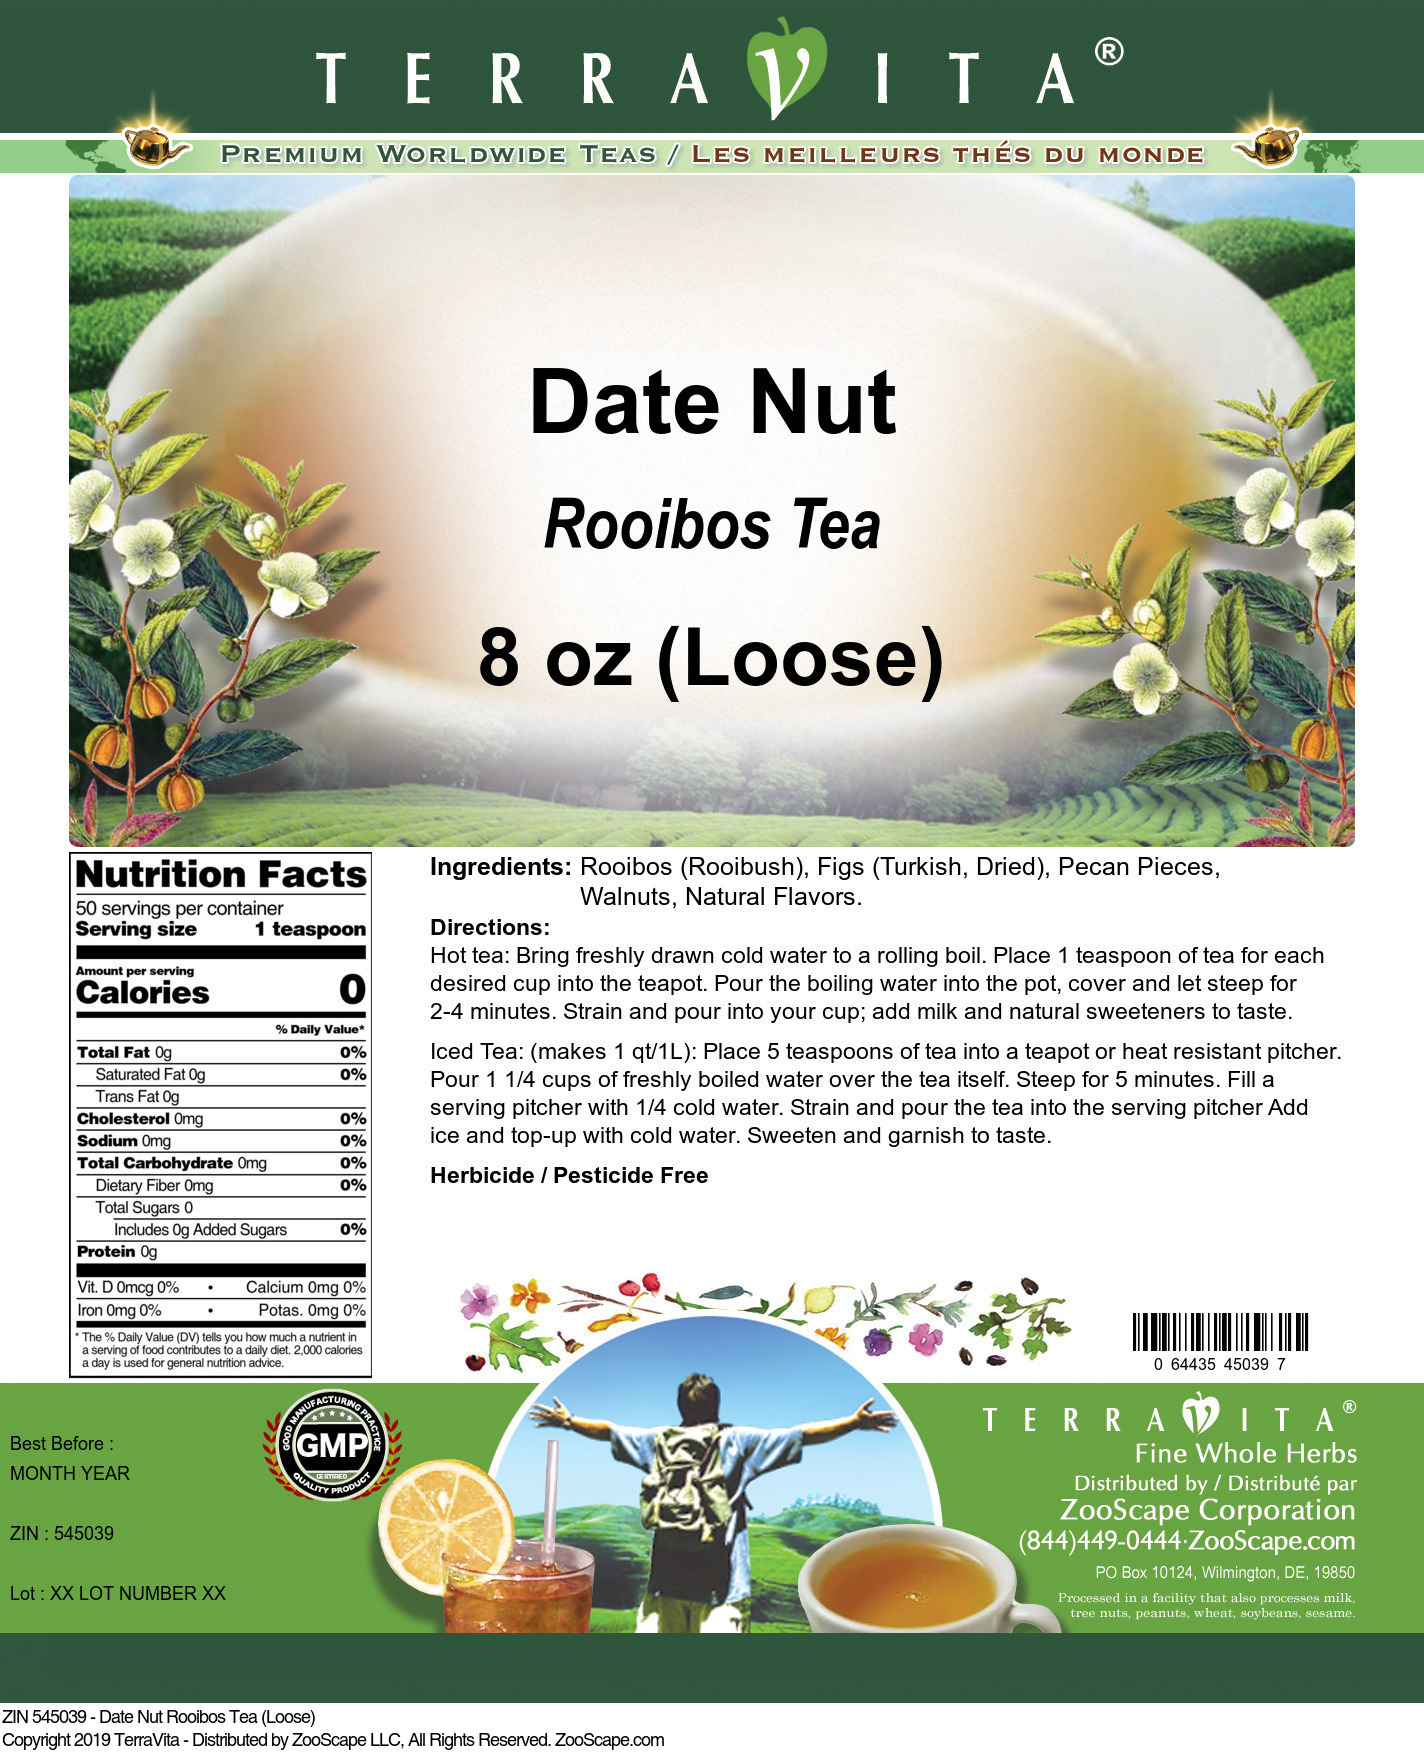 Date Nut Rooibos Tea (Loose) - Label